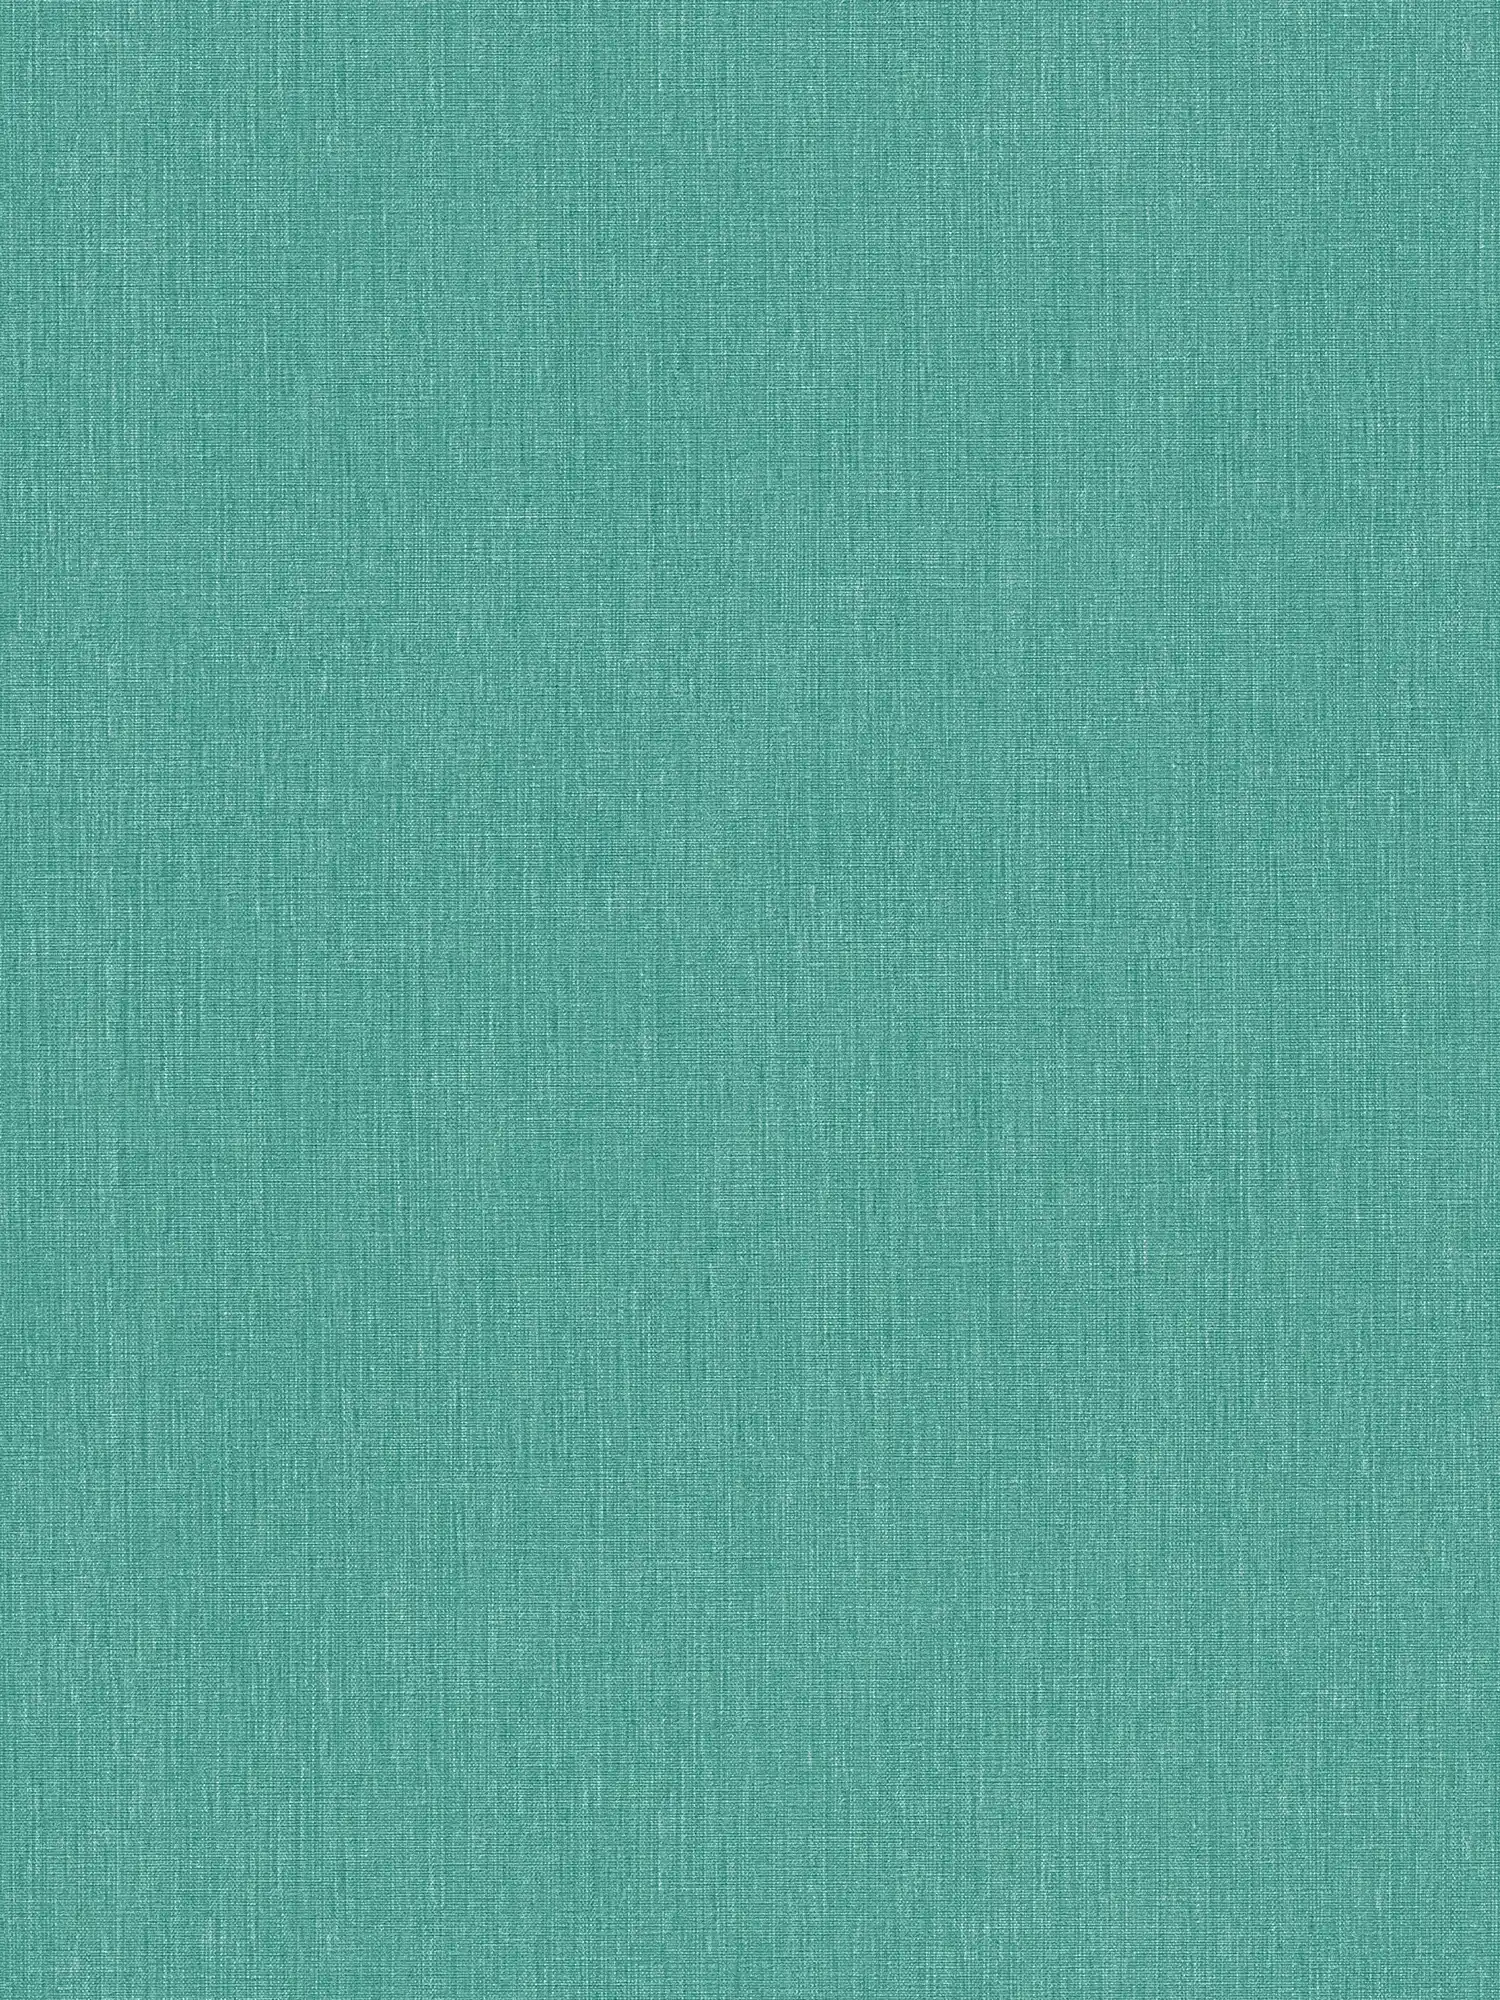 Plain wallpaper with texture on non-woven in matt look - green, blue
